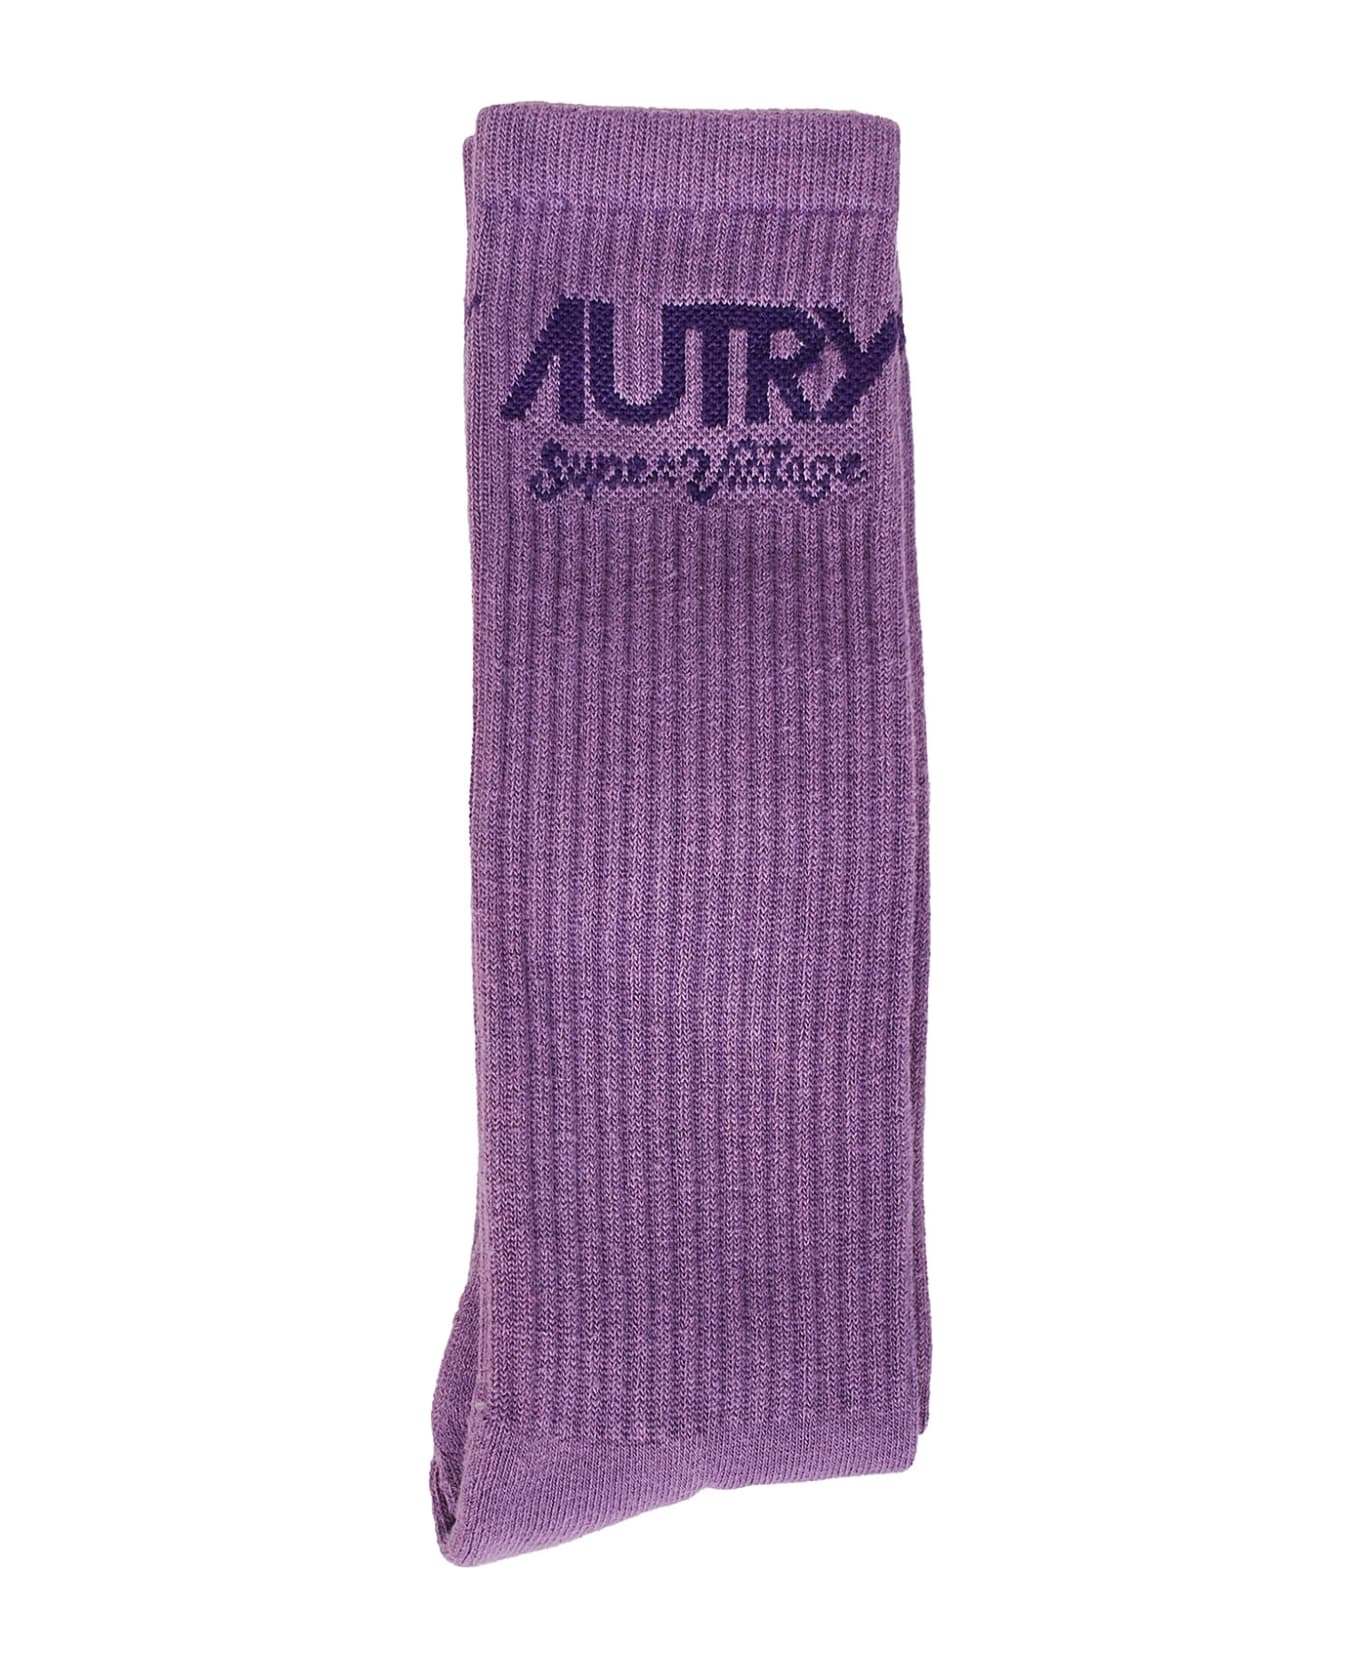 Autry Supervintage Socks - Lilac